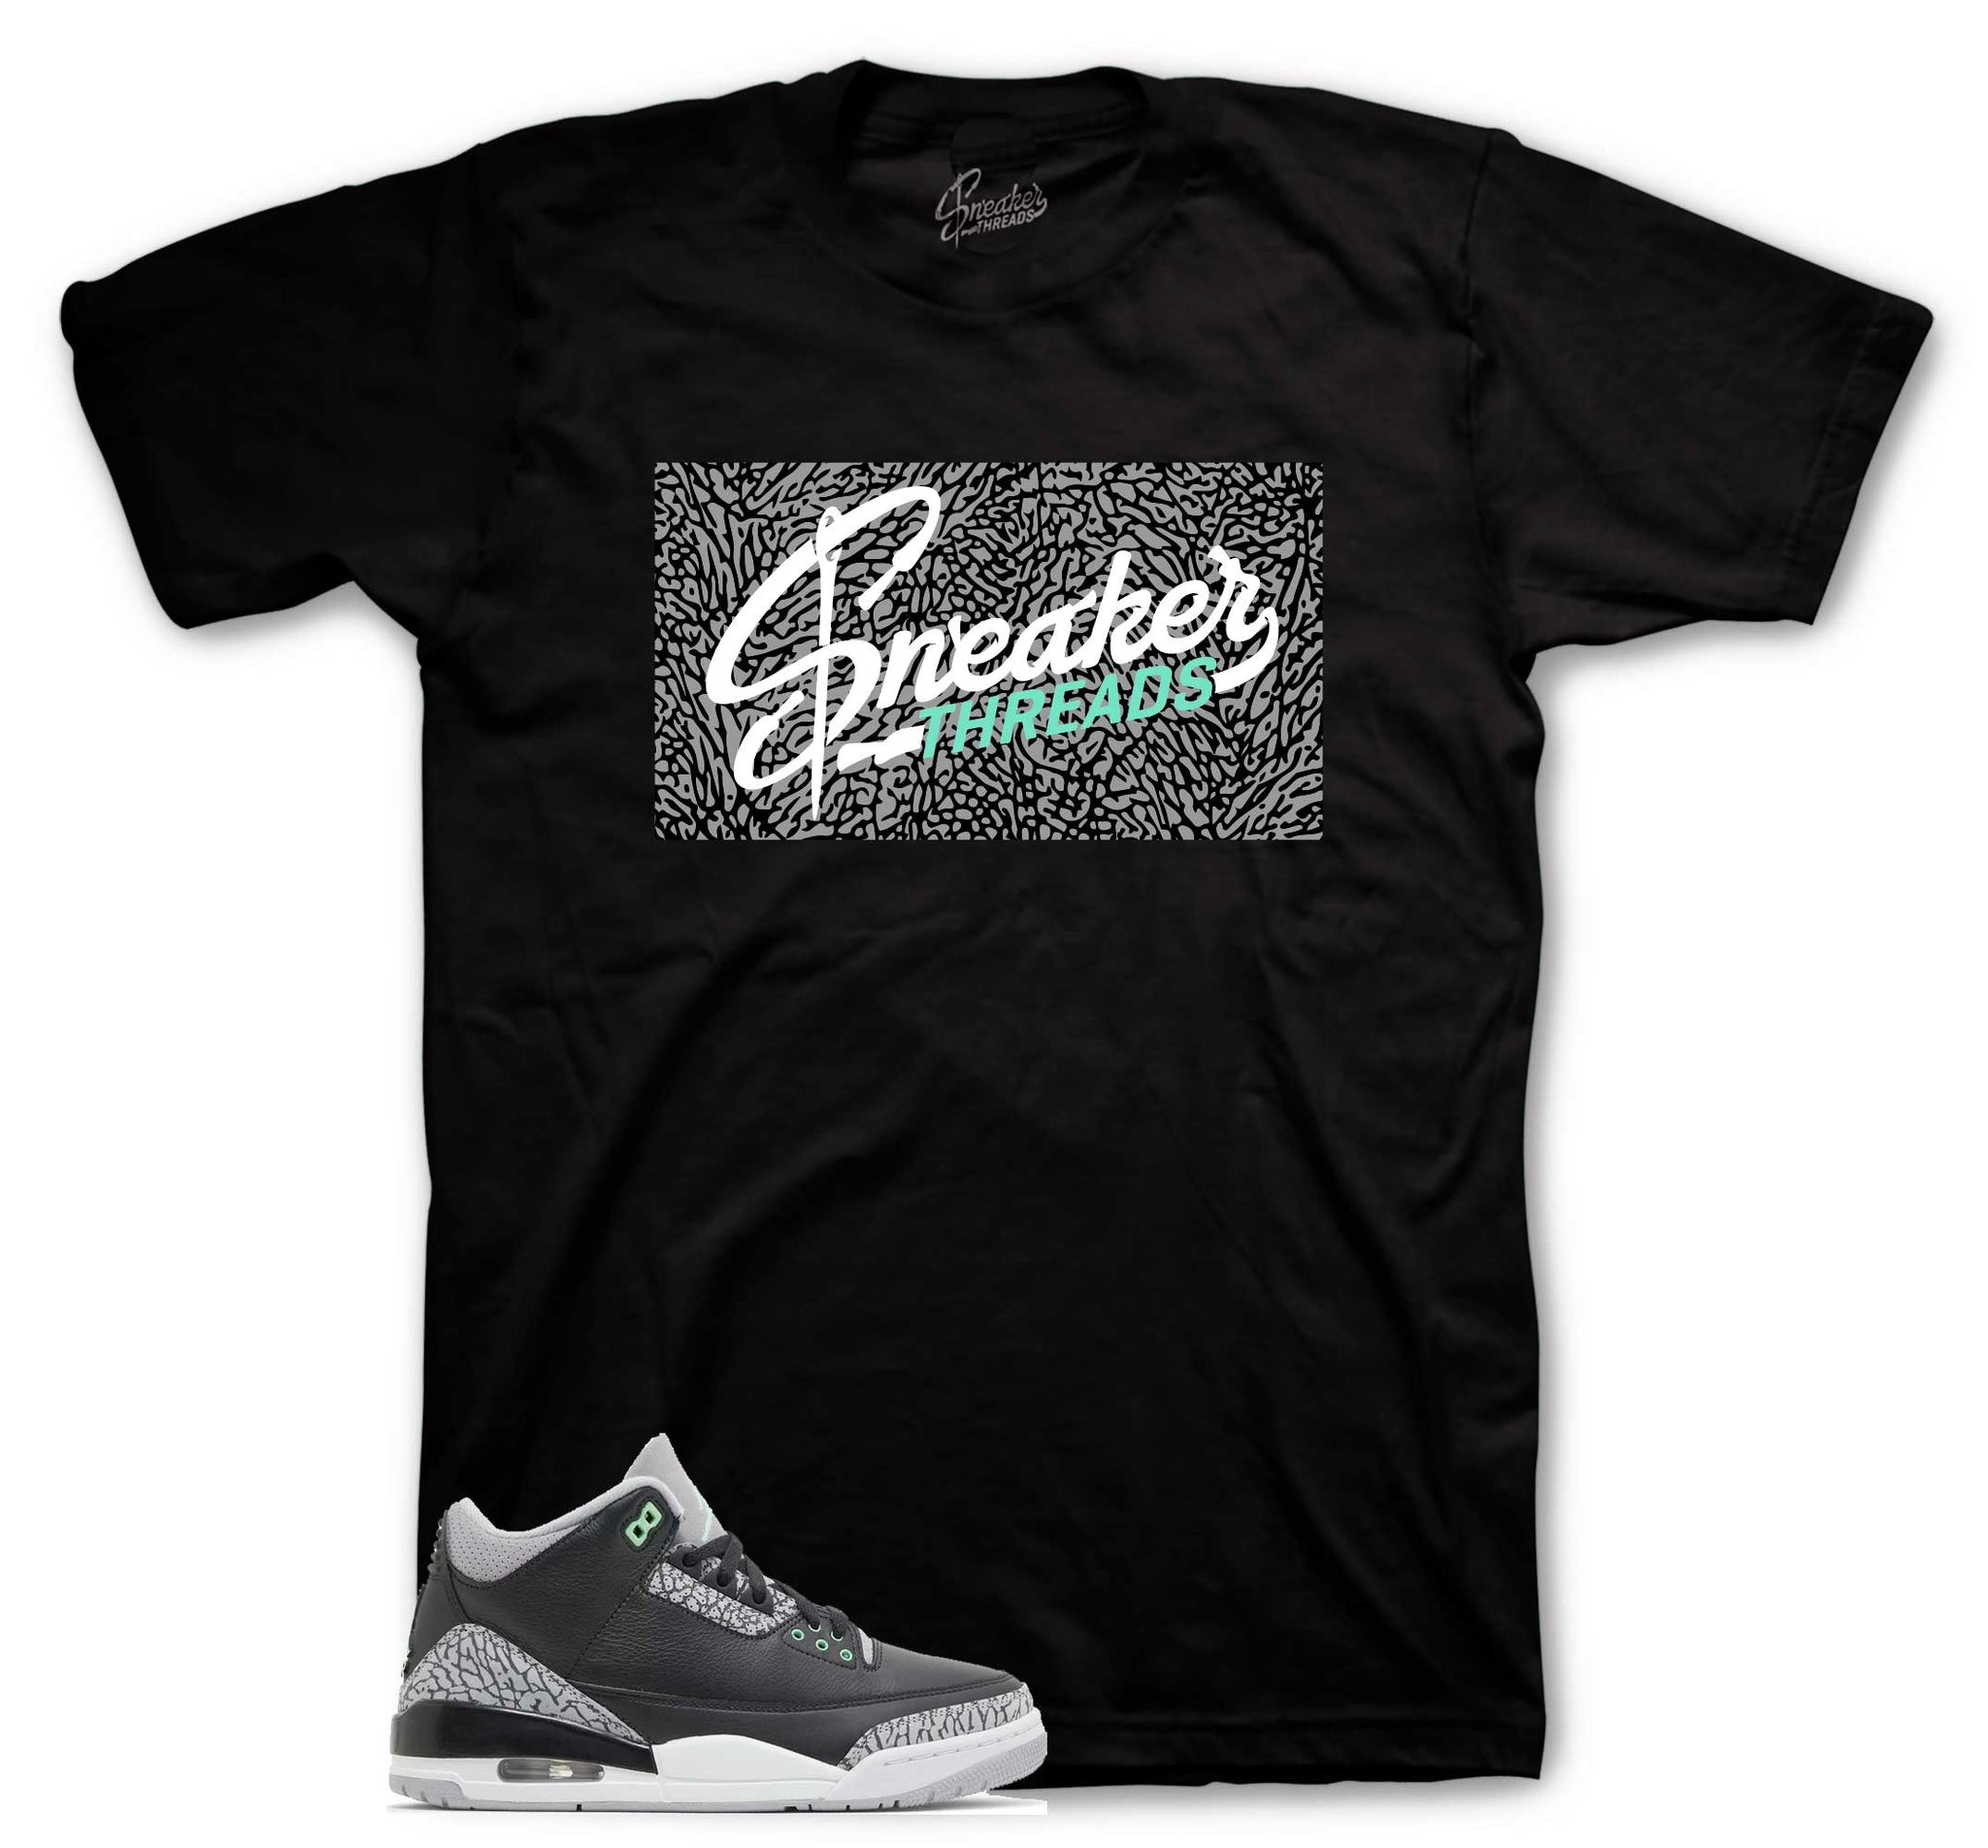 Retro 3 Green Glow Shirt - Sneaker Threads Logo Box - Black